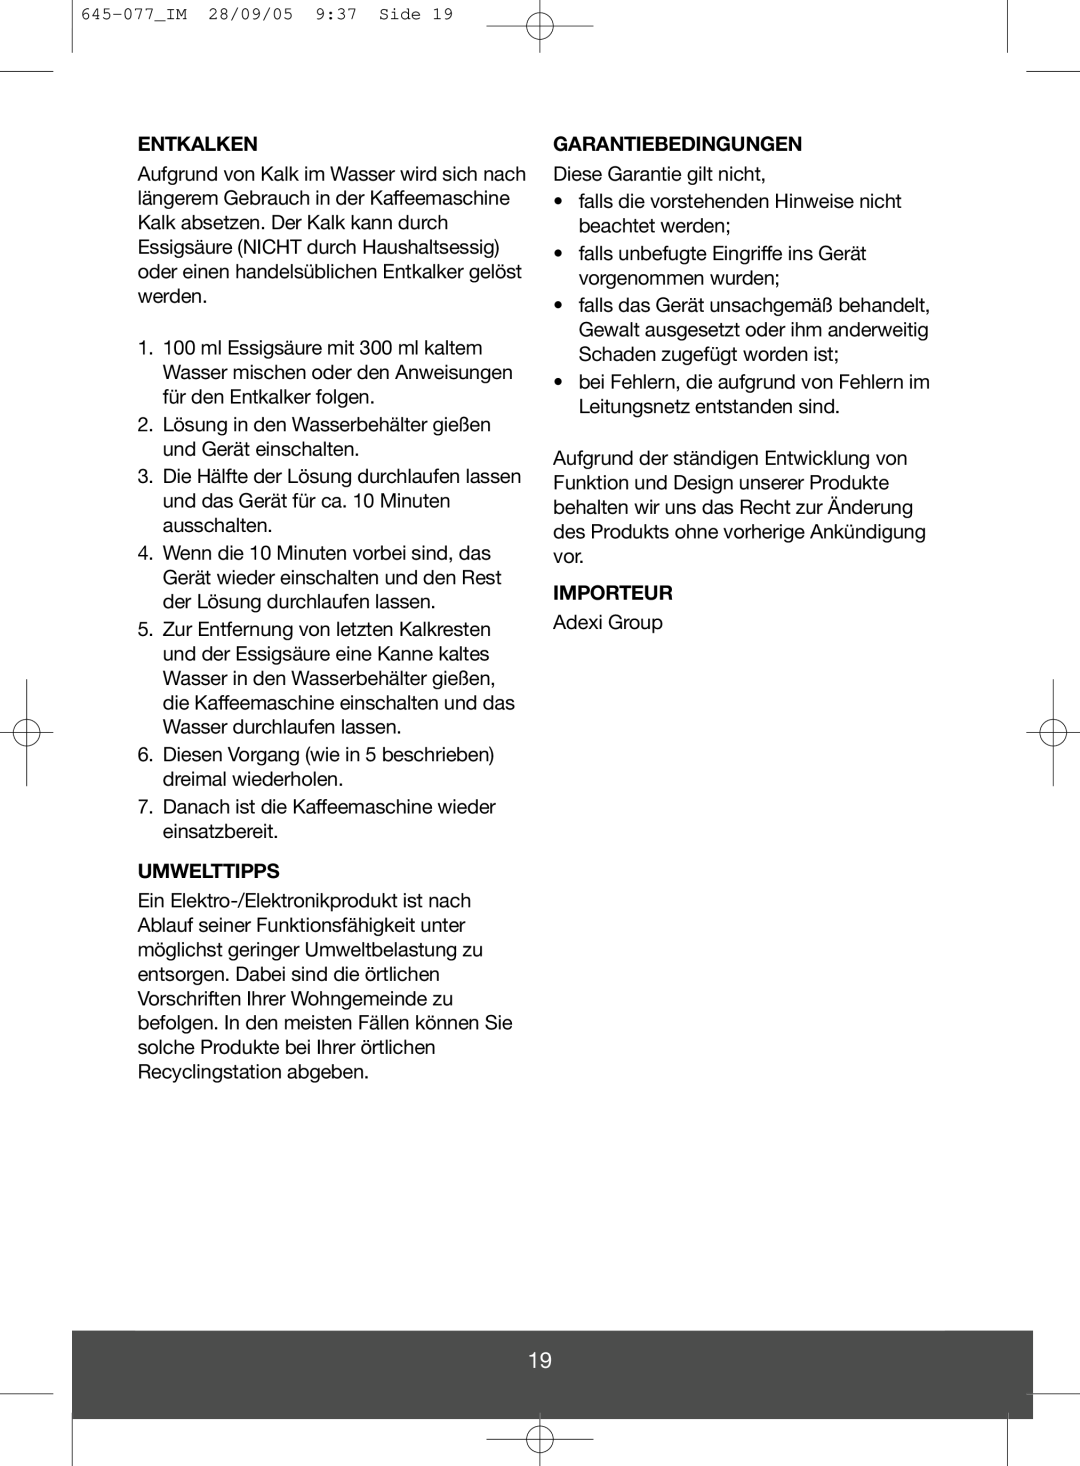 Melissa 645-077 manual Entkalken, Umwelttipps, Garantiebedingungen, Importeur 